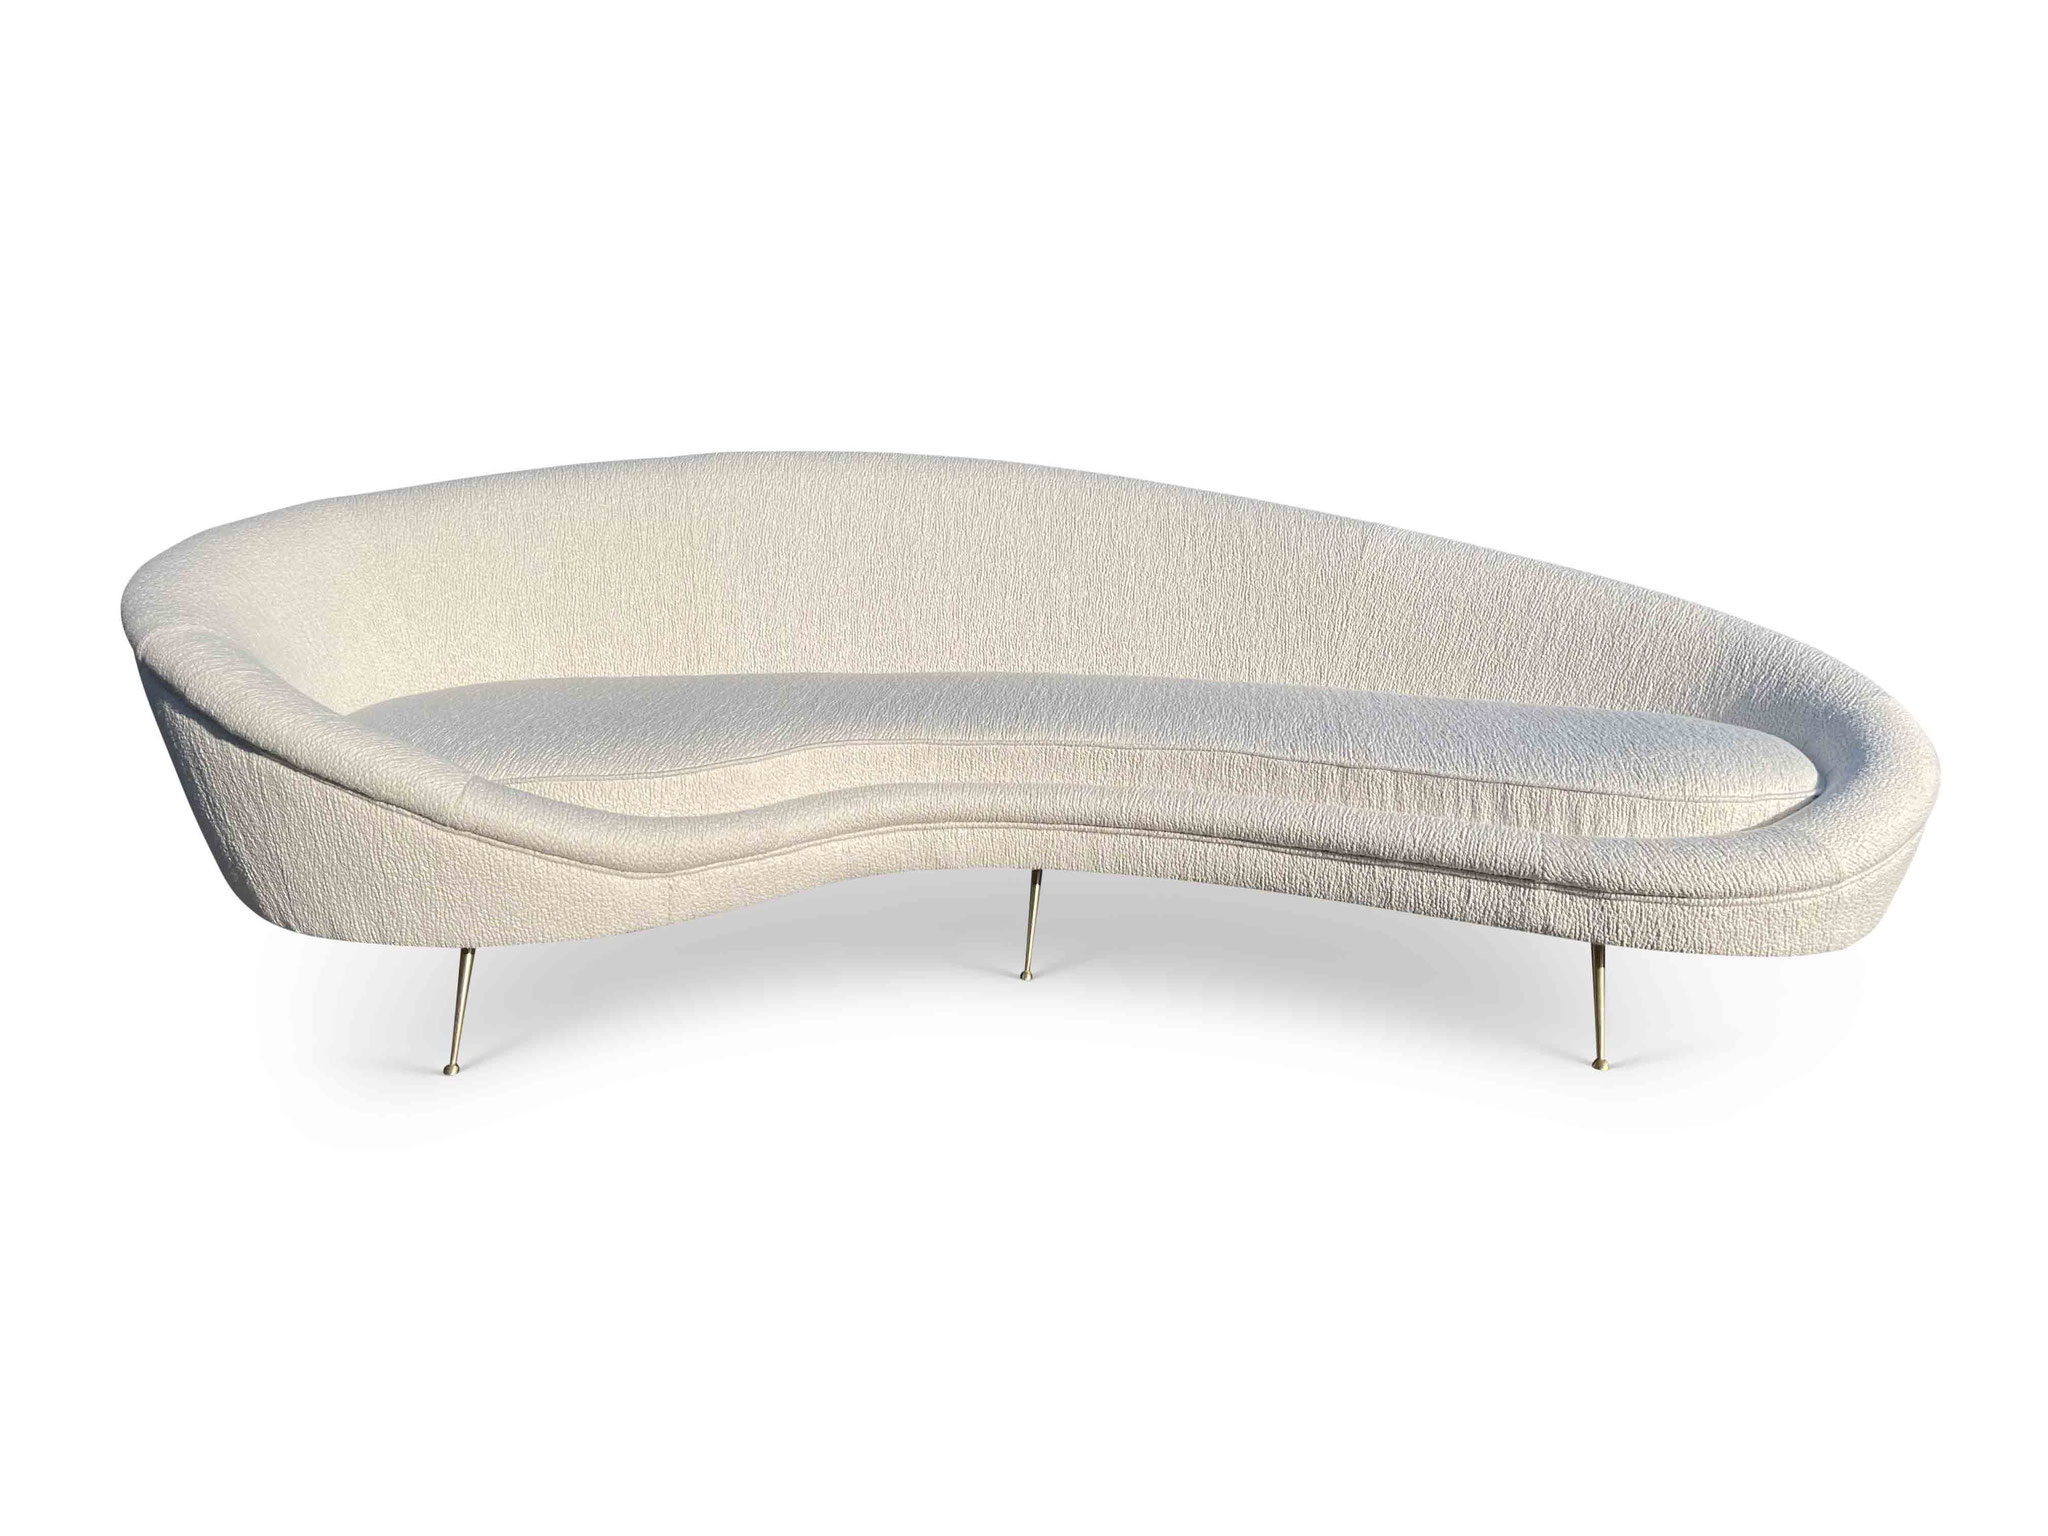 Ico Parisi mid century curved sofa New York